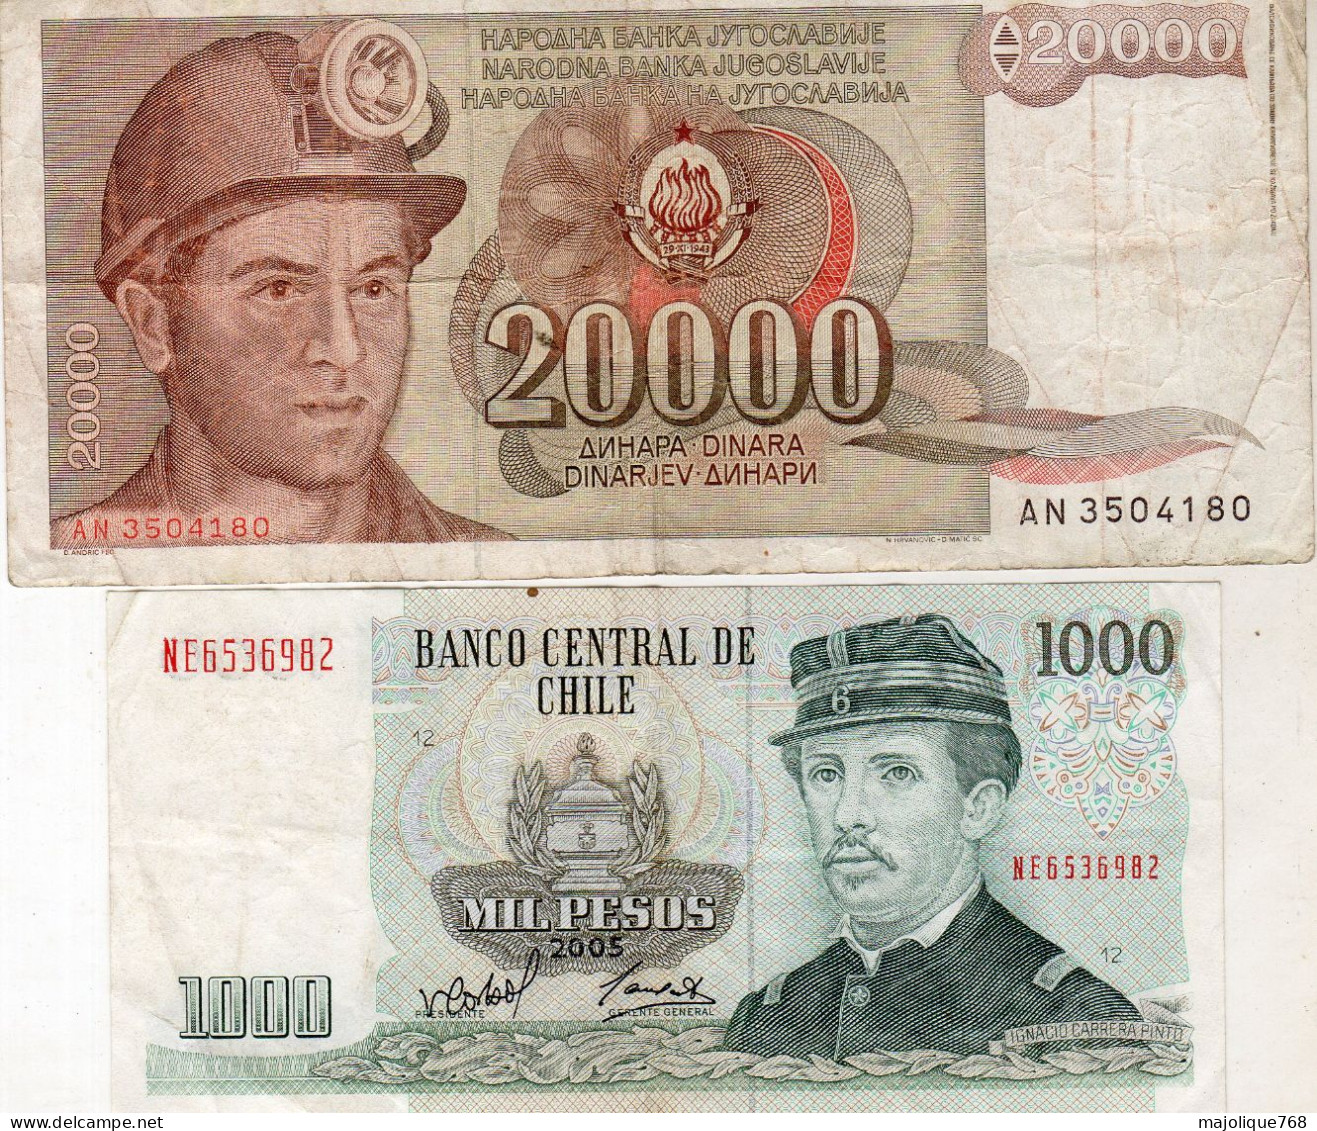 Lot De 2 Billets étranger - 20000 Dinara 1987 De Yougoslavie - 1000 Pésos 2005 Du Chili - Alla Rinfusa - Banconote